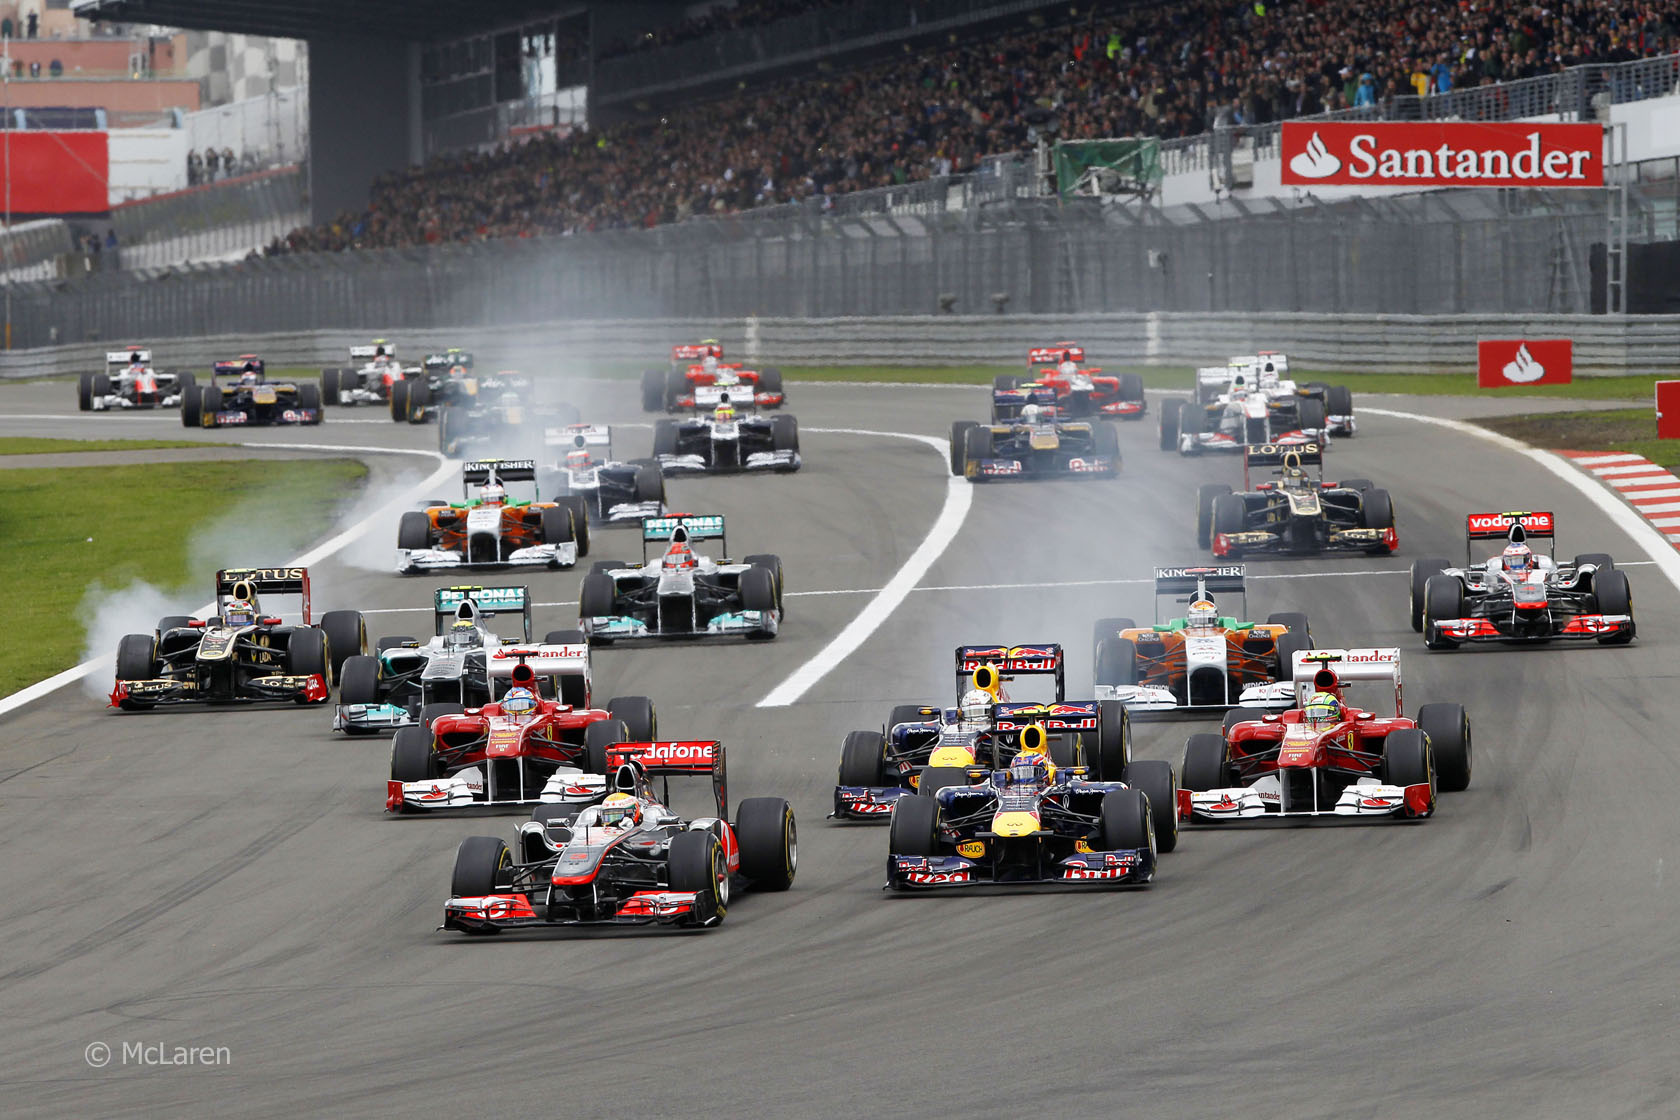 Grand Prix Germany